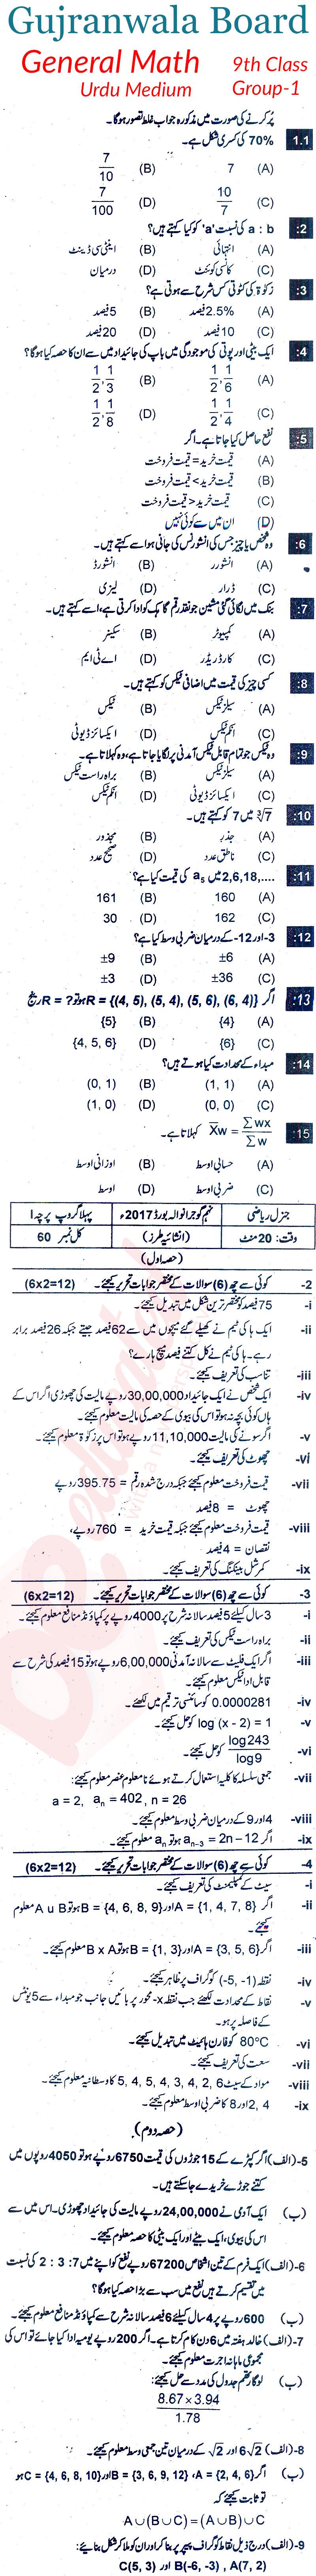 General Math 9th Urdu Medium Past Paper Group 1 BISE Gujranwala 2017